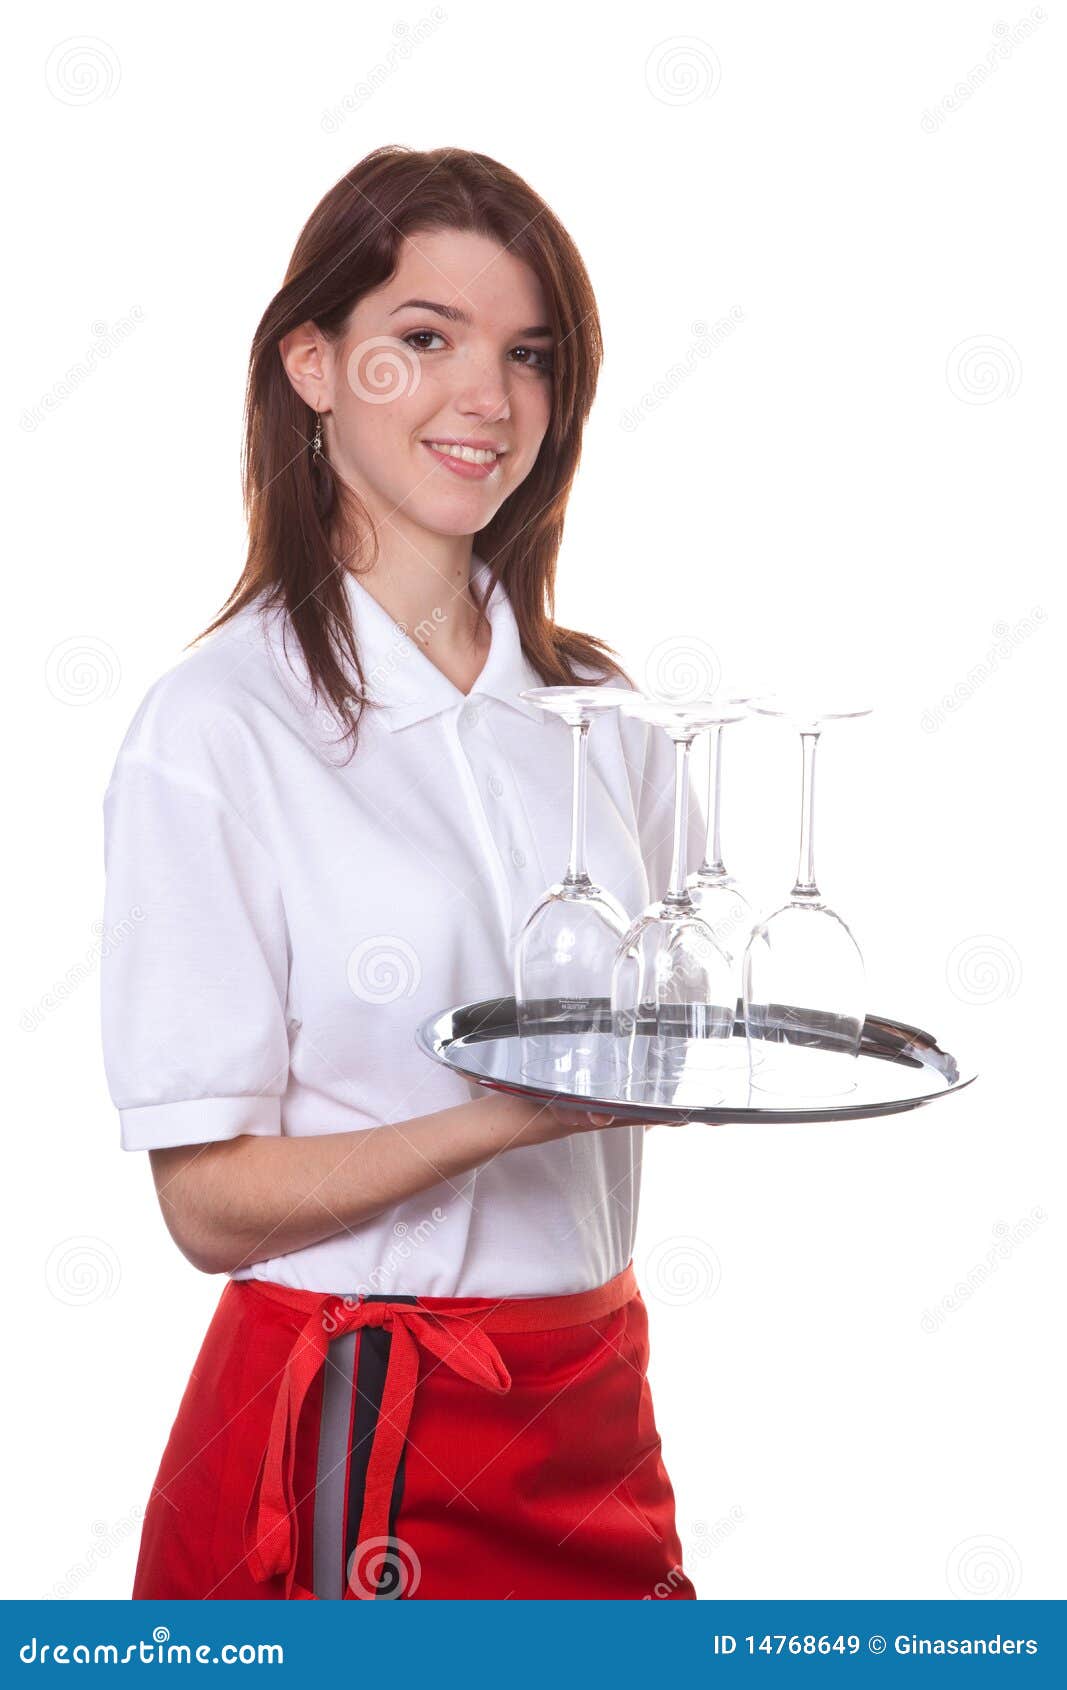 young waitress